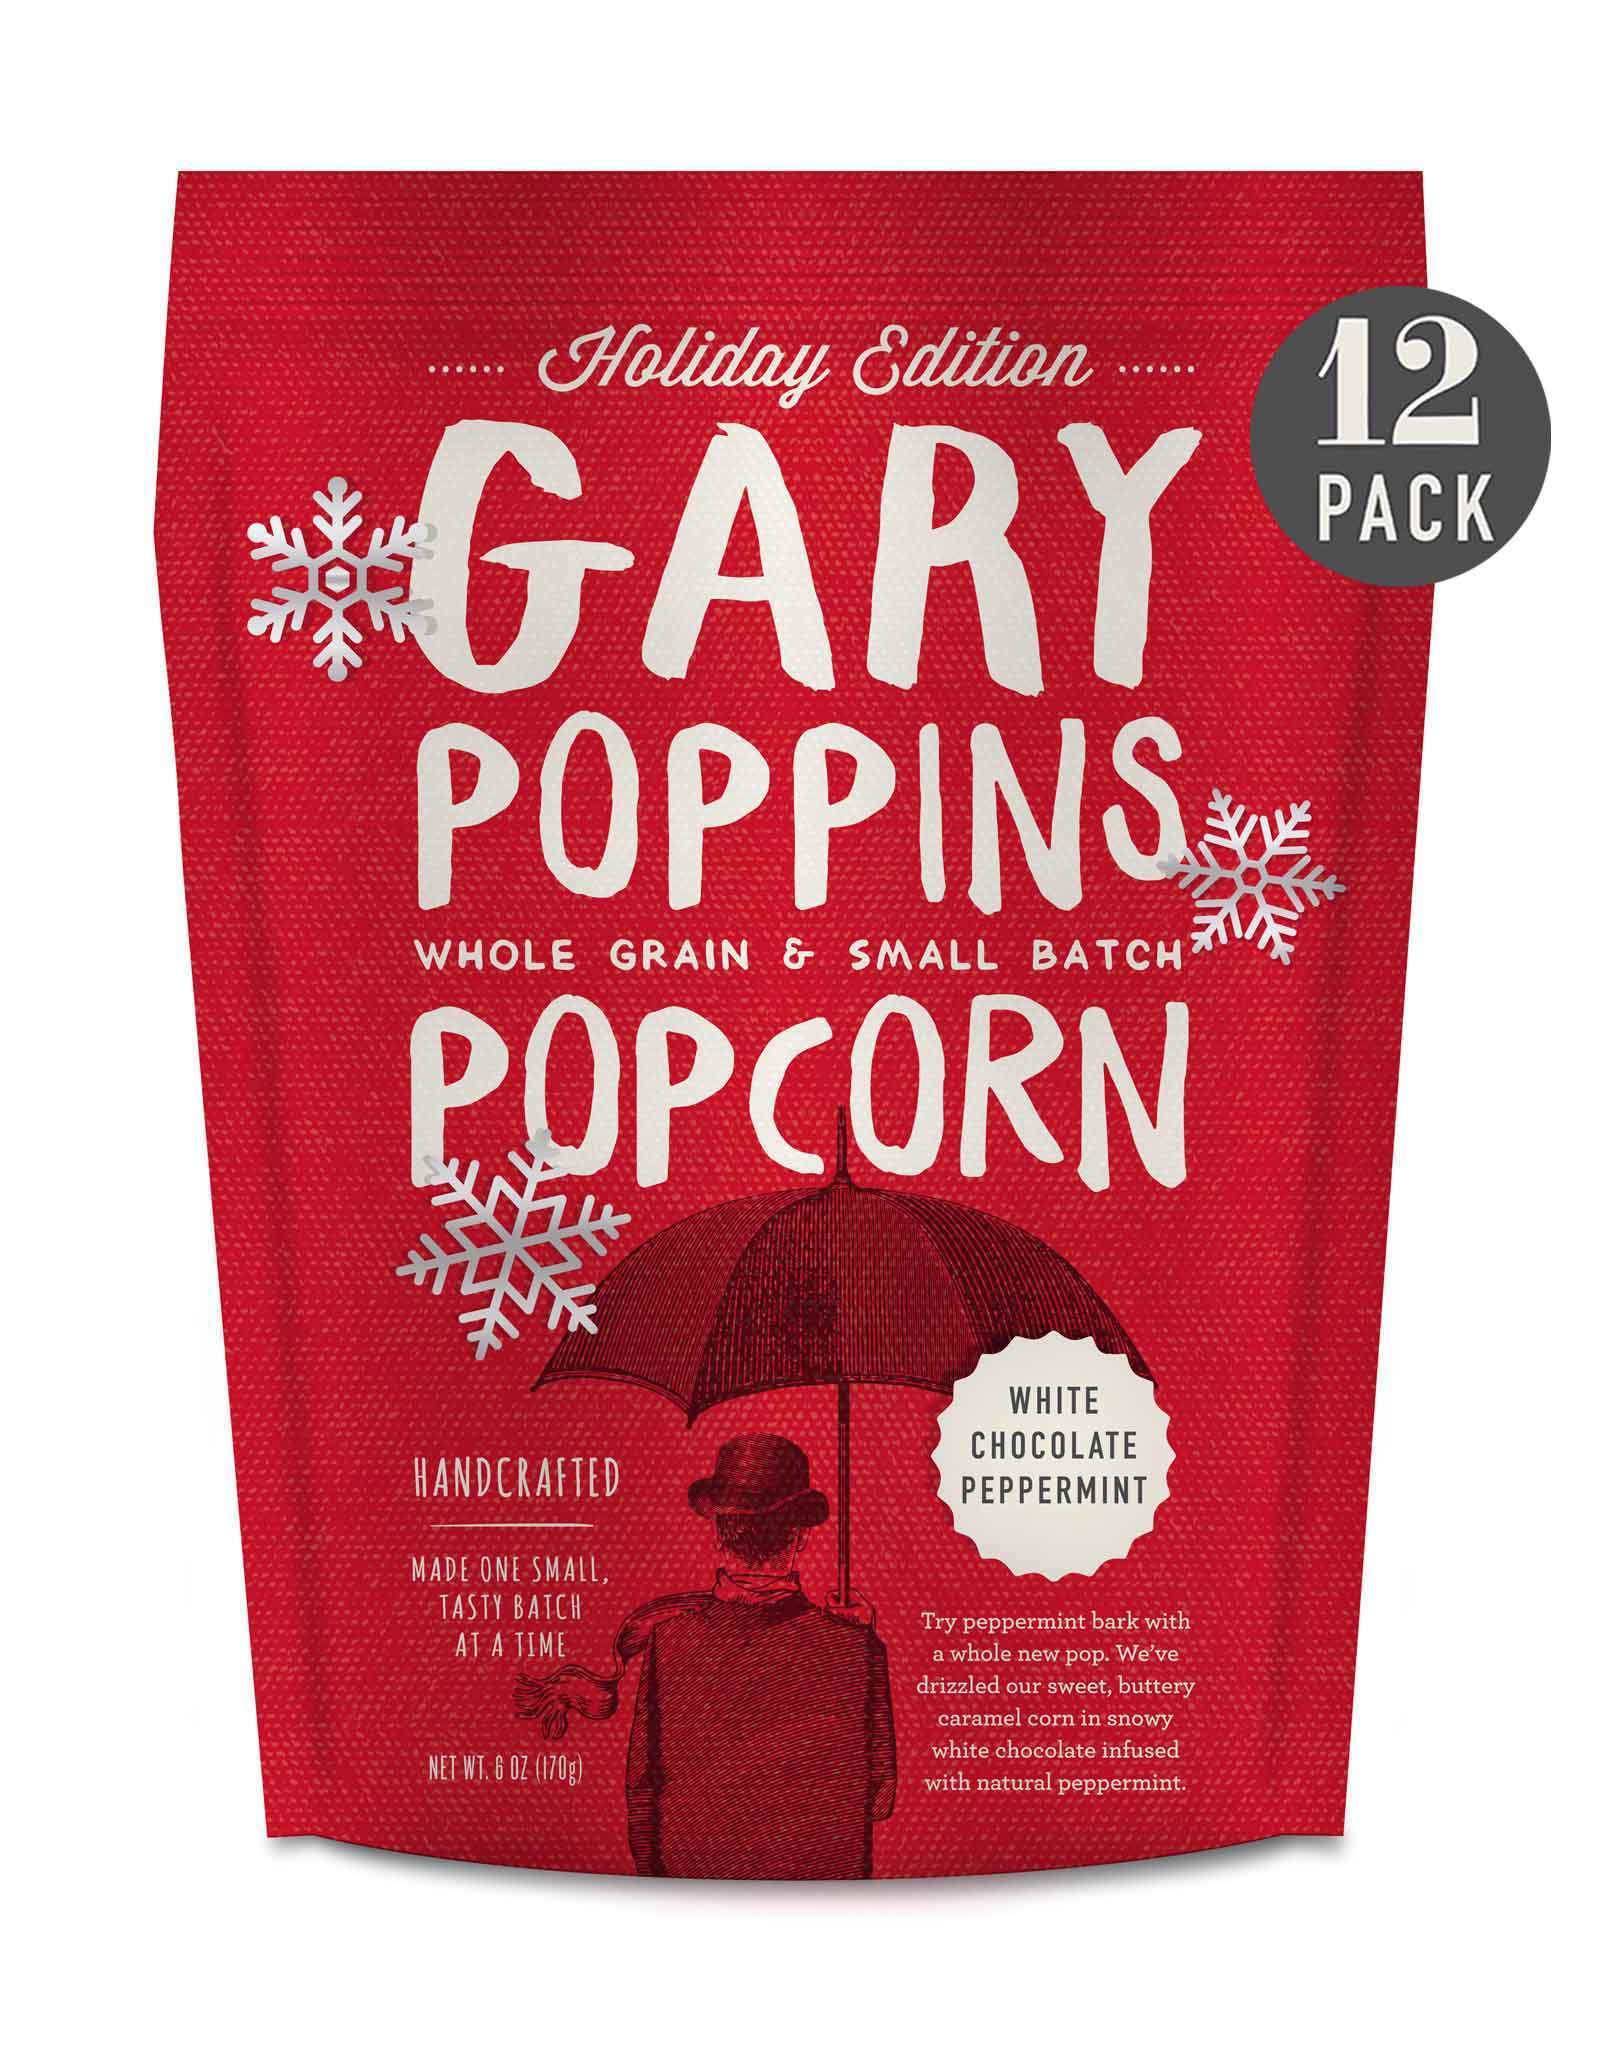 White Chocolate Peppermint - Gary Poppins Popcorn